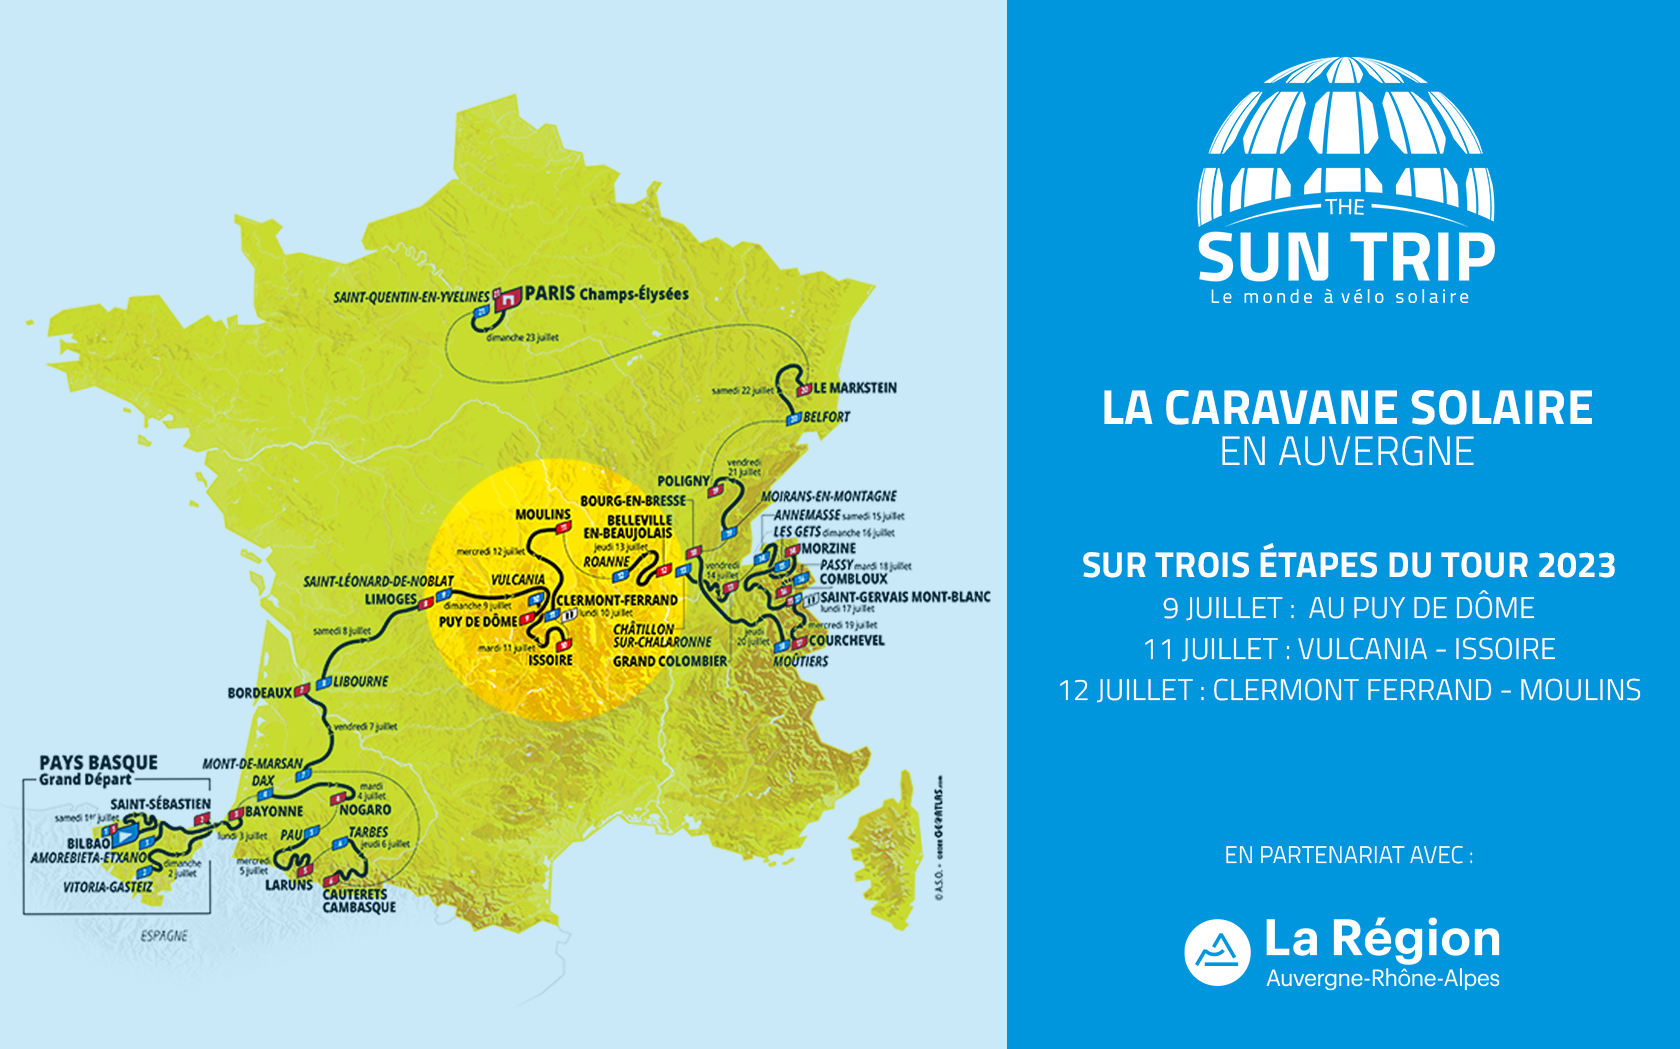 The Sun Trip on the Tour de France 2023   The Sun Trip